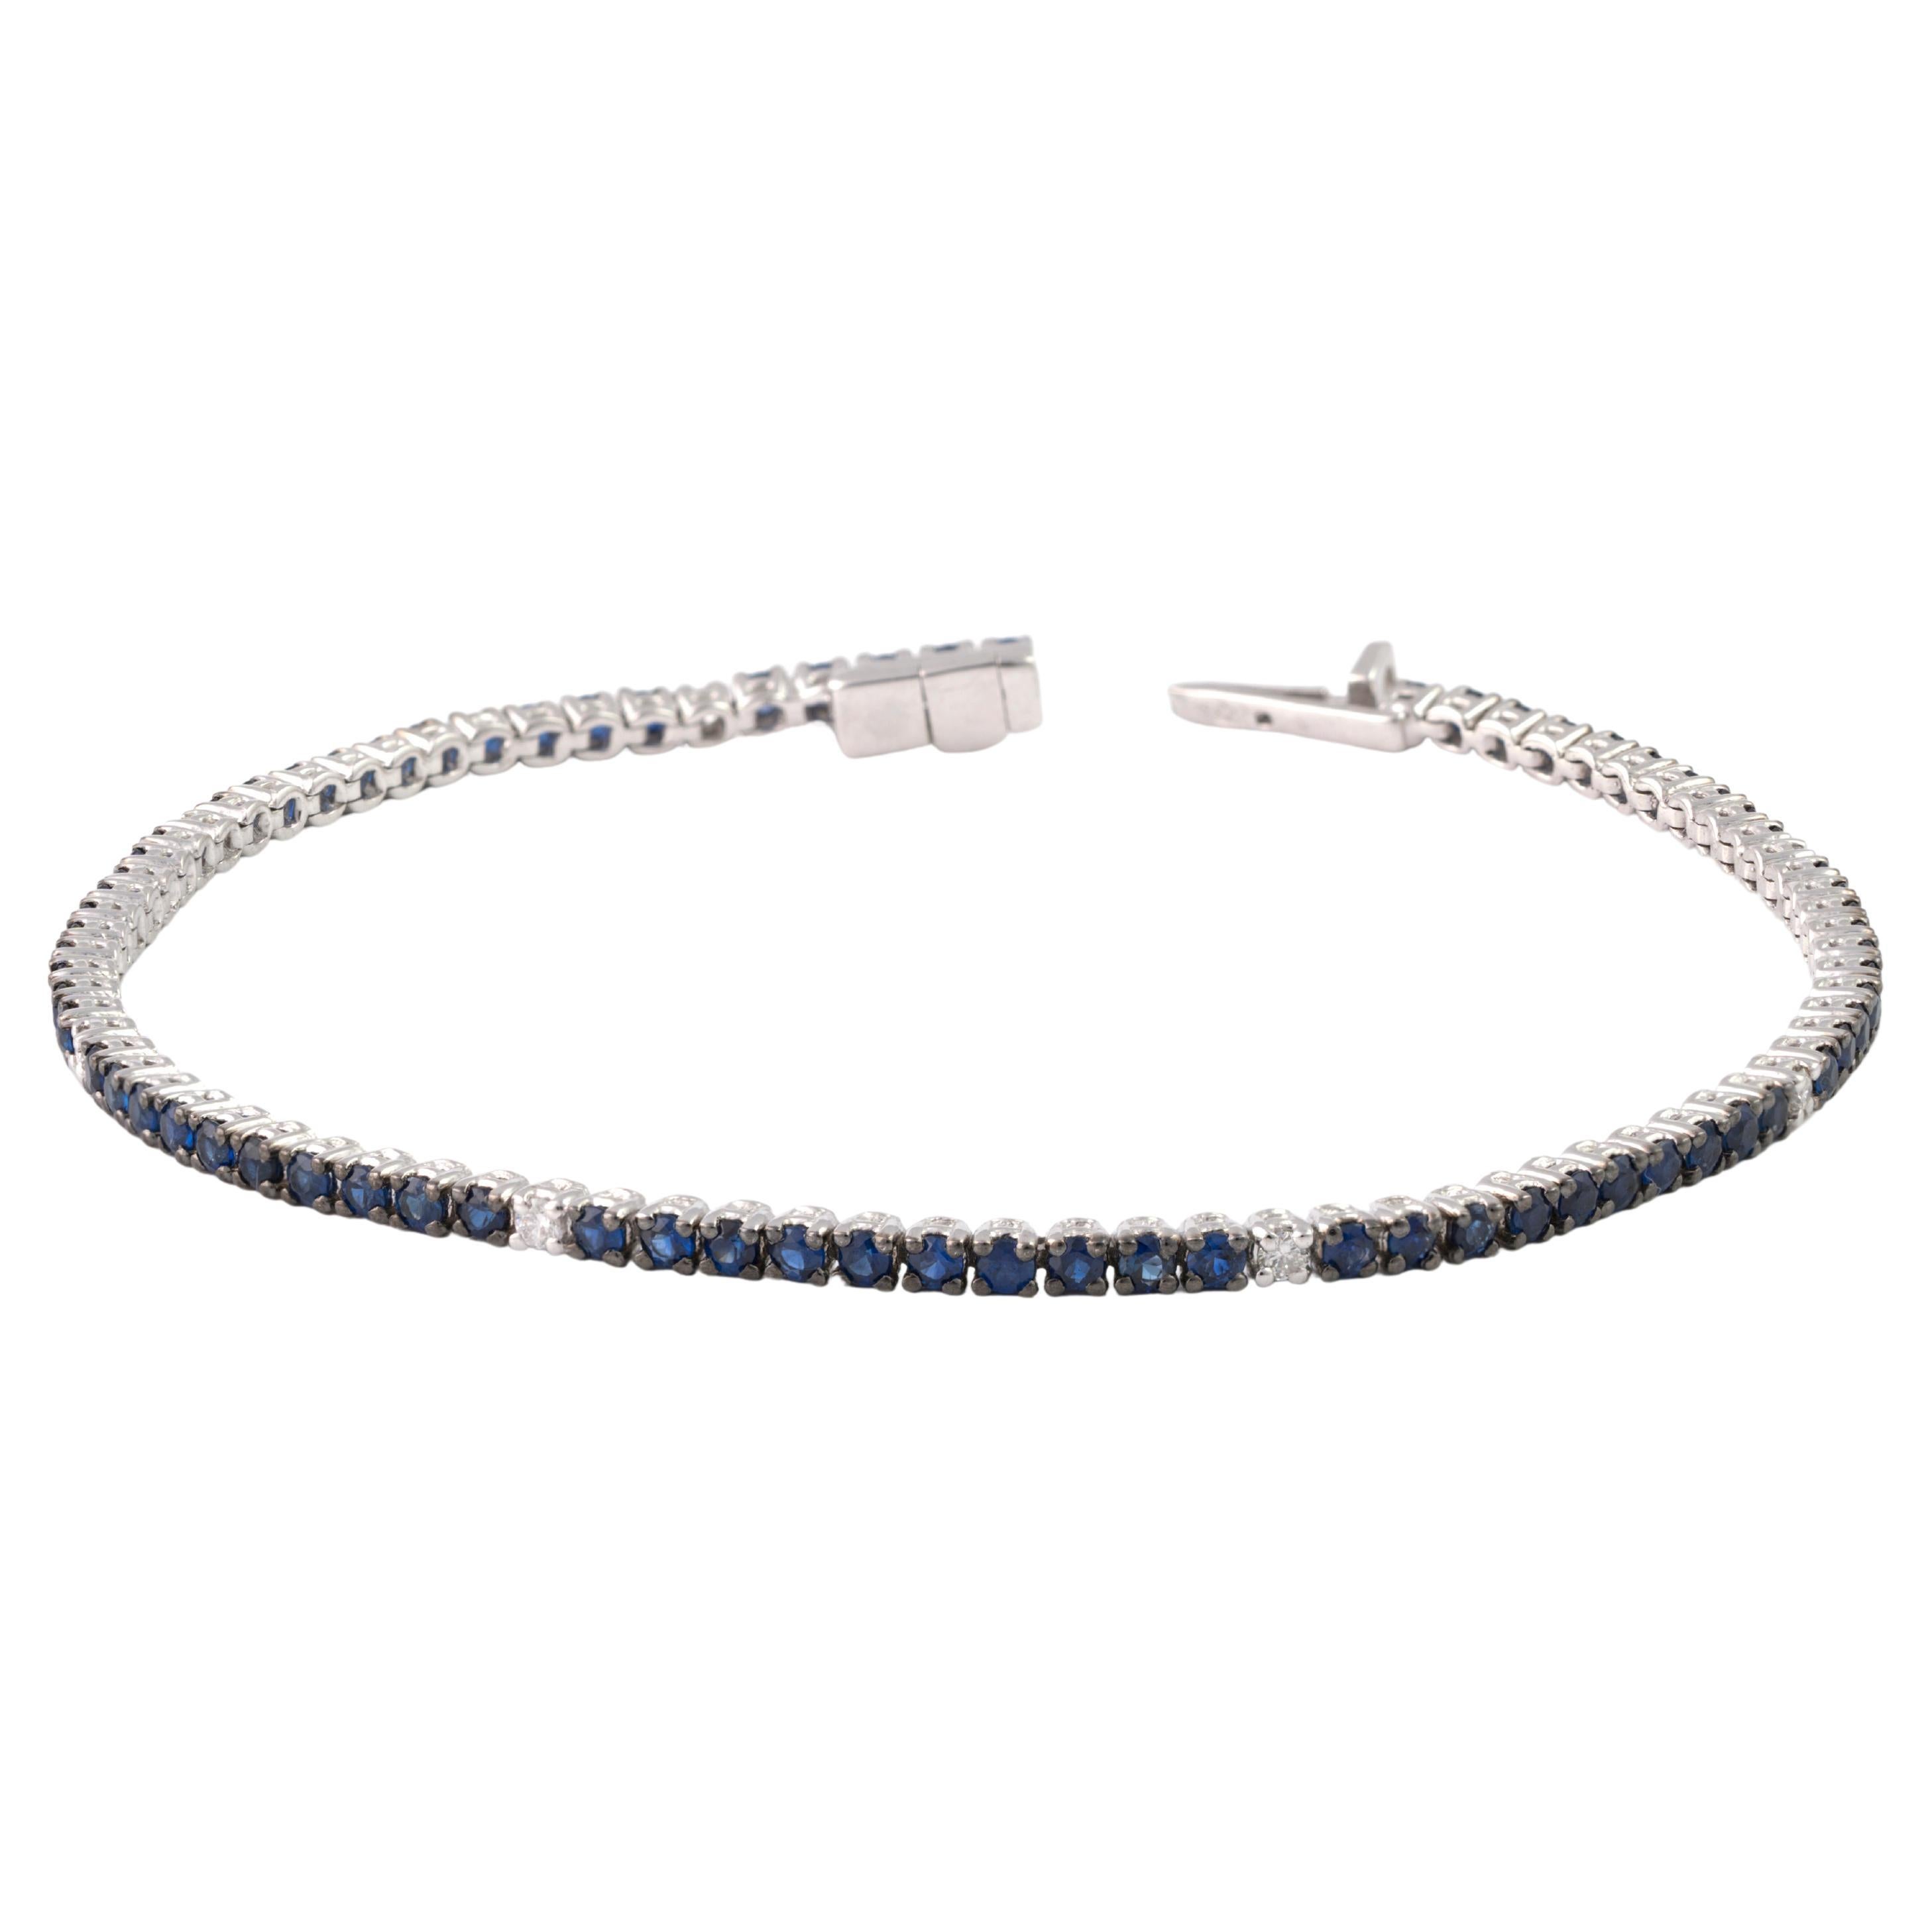 Bracelet tennis 14 carats avec saphir bleu naturel de 2,41 carats et diamants de 0,15 carat